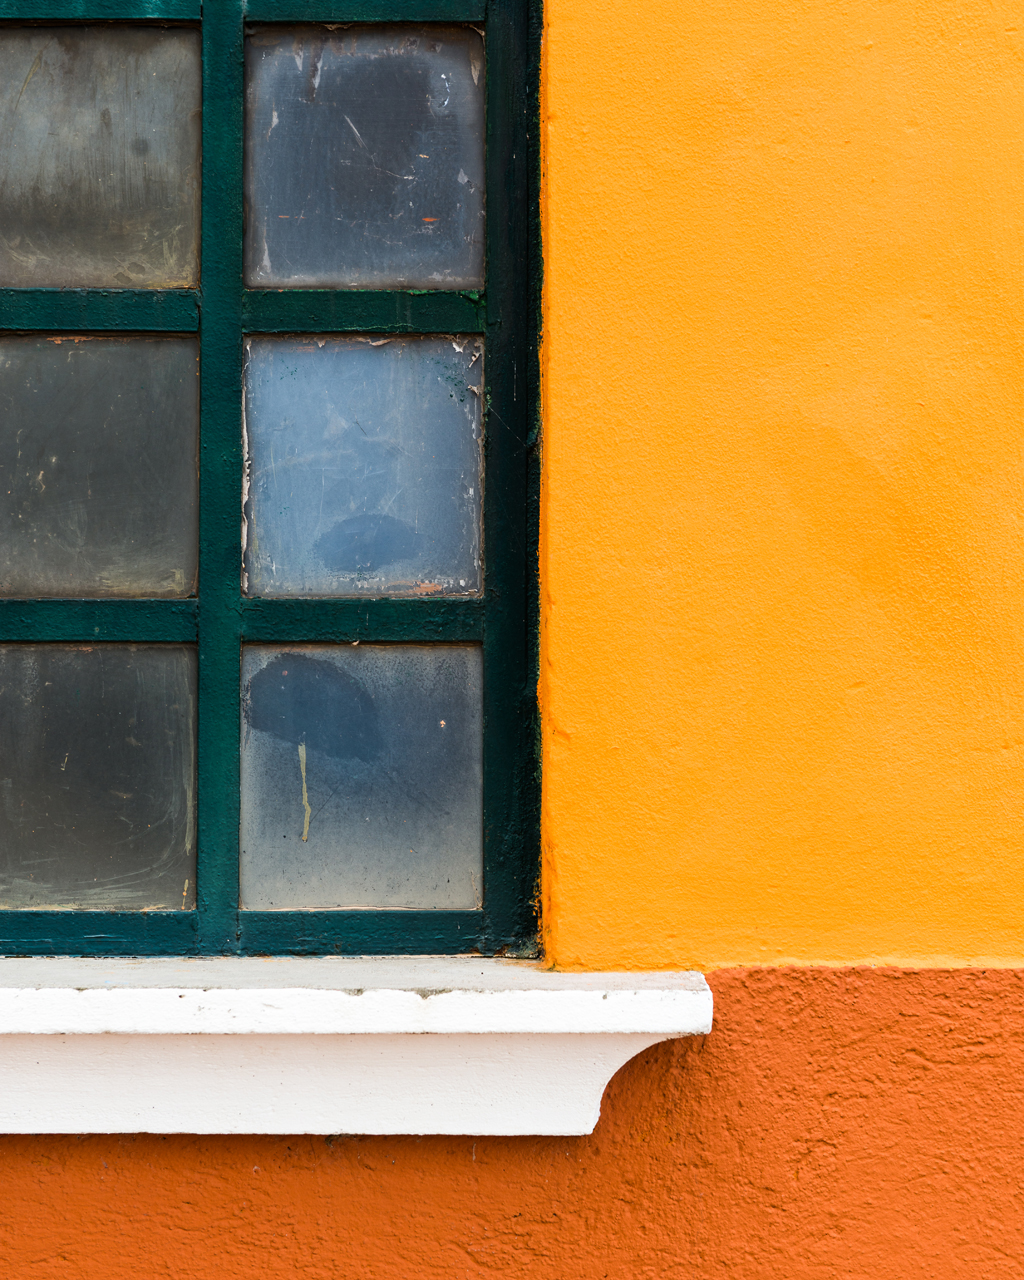 A Window in Burano